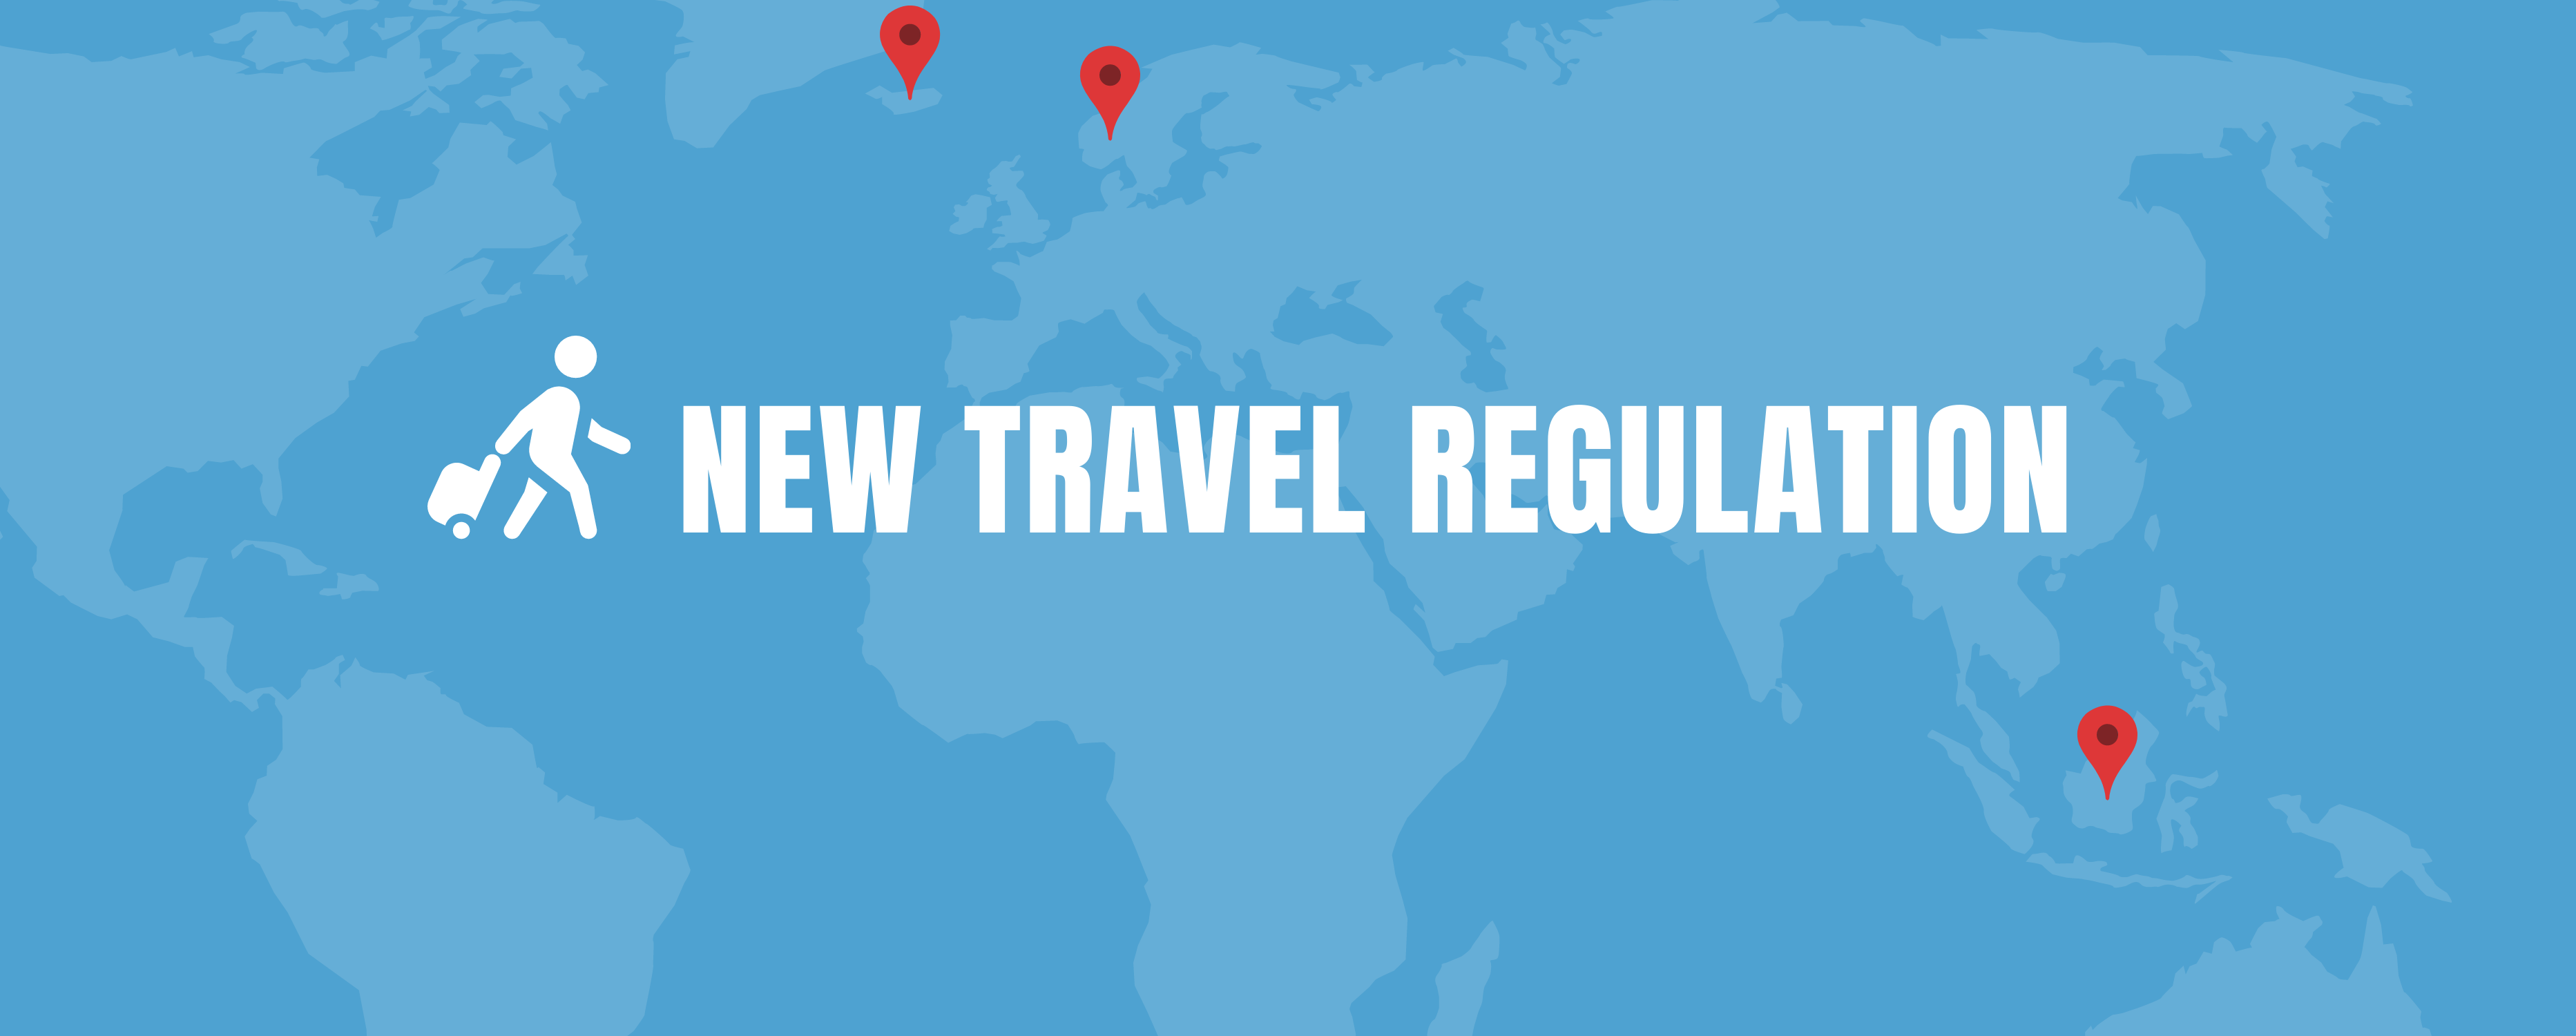 joint travel regulations international travel